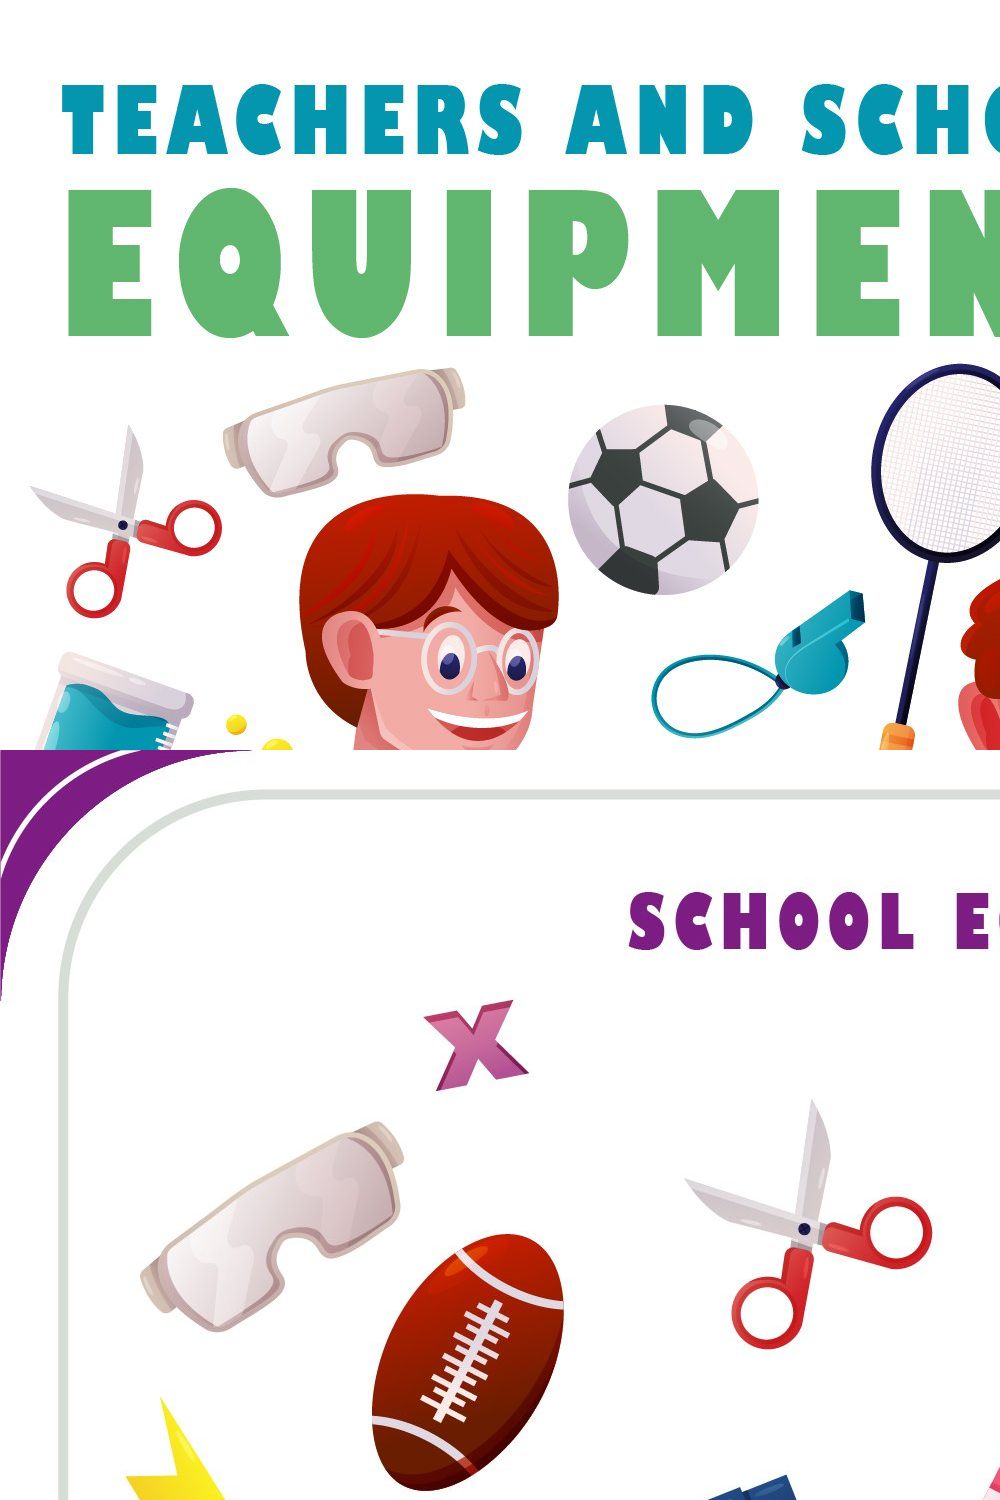 Teachers and school equipment pinterest preview image.